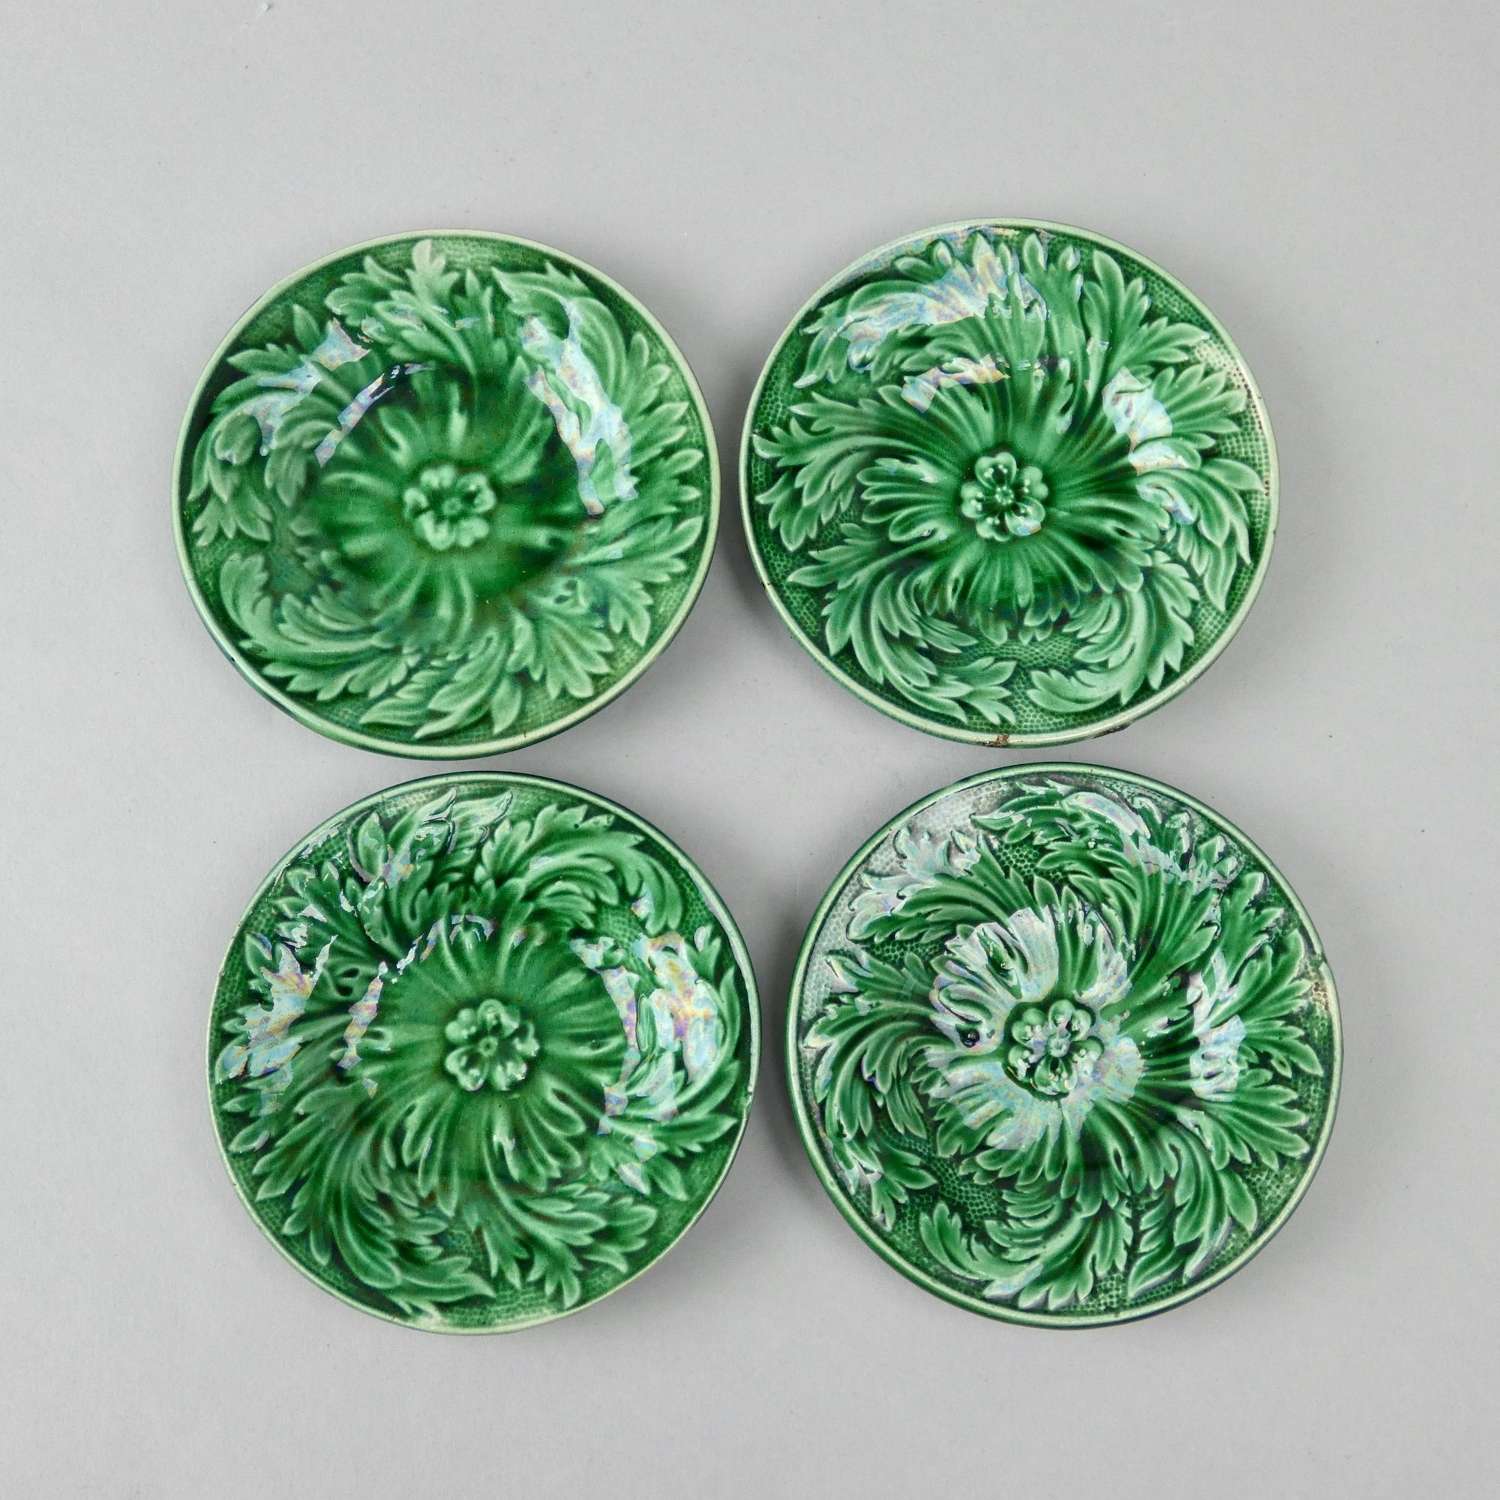 Miniature green glaze plates